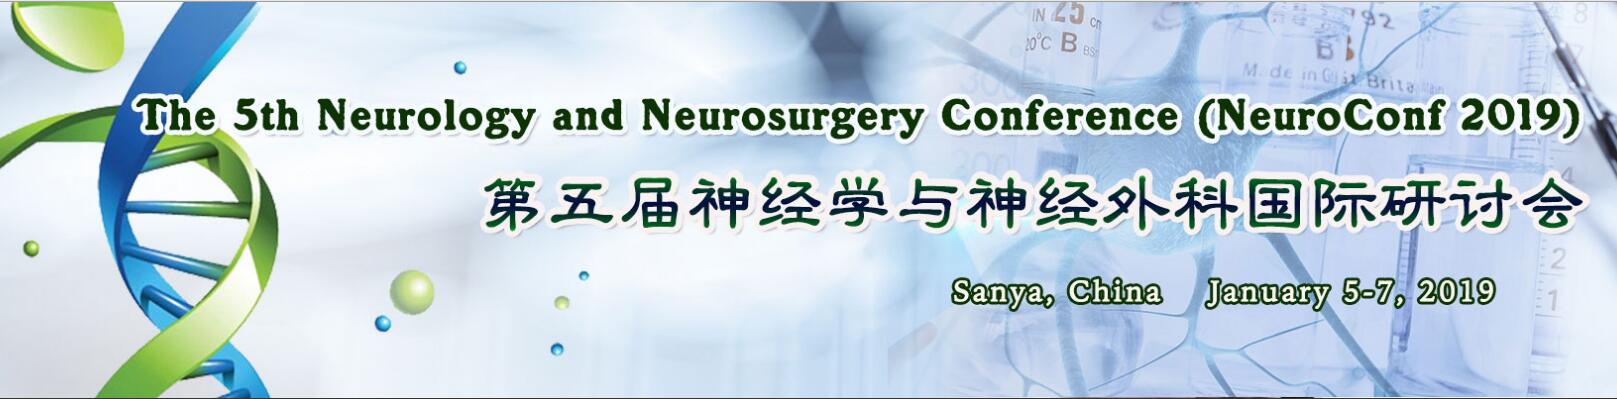 The 5th Neurology and Neurosurgery Conference (NeuroConf 2019), Sanya, Hainan, China